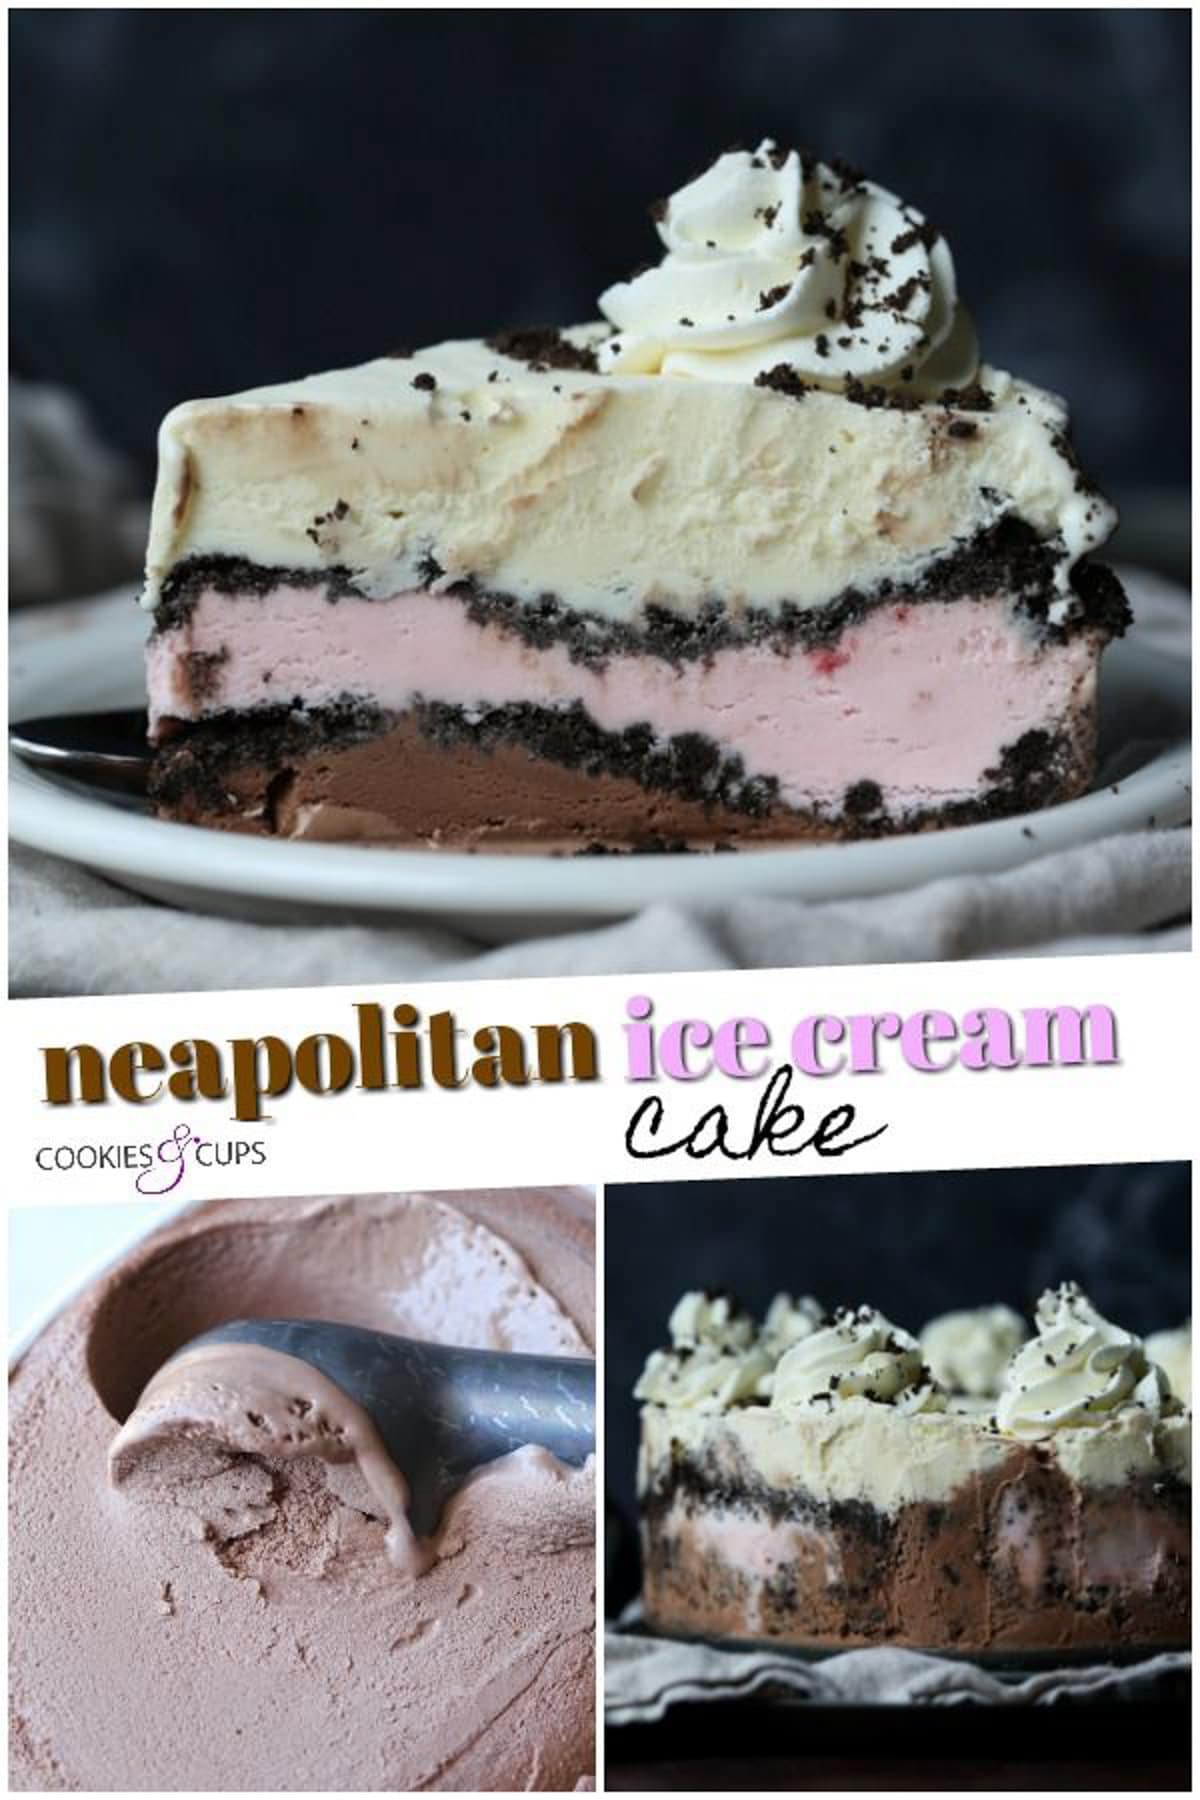 Neapolitan Ice Cream Cake Pinterest collage